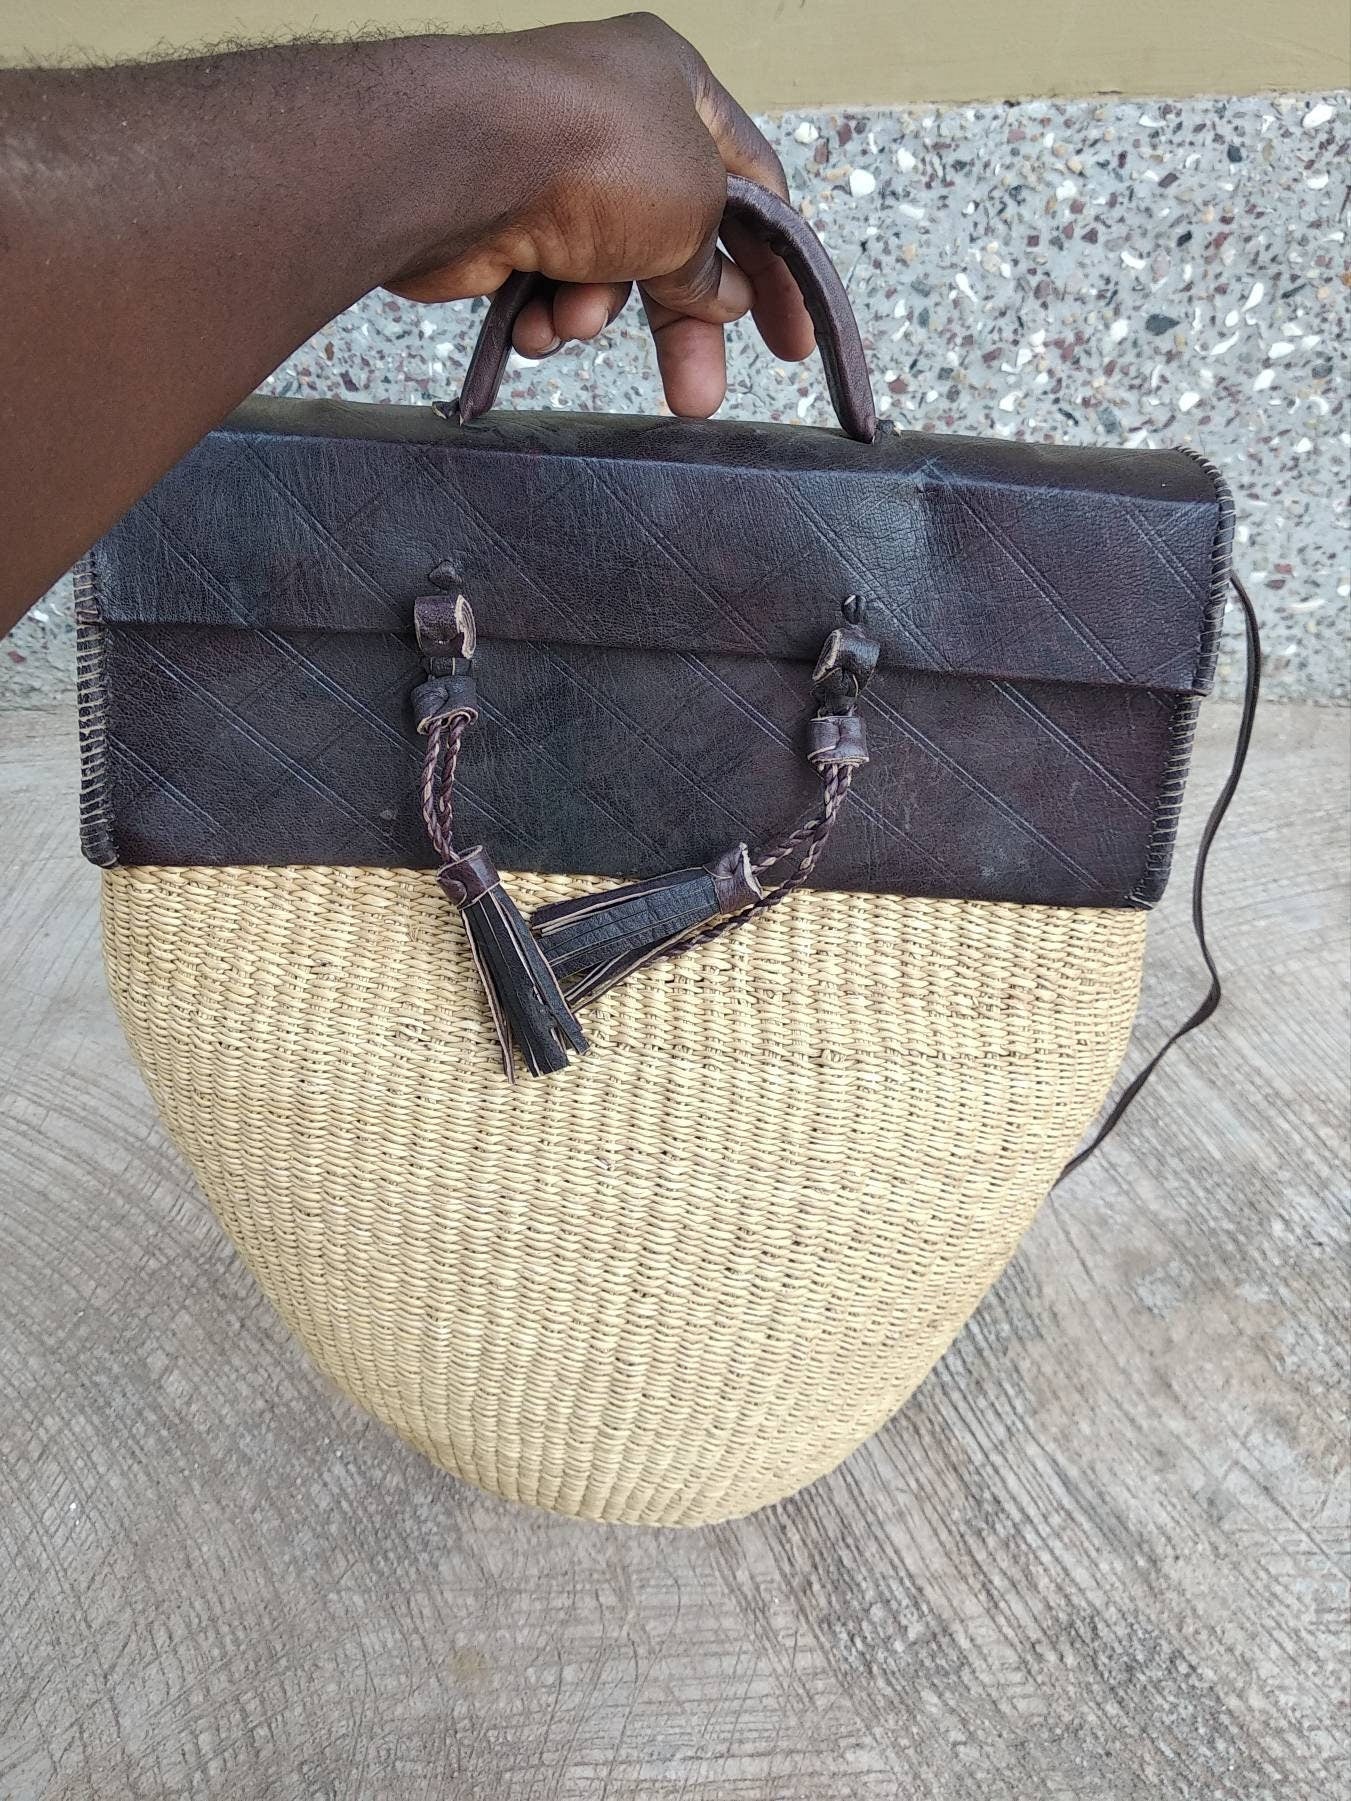 Messenger bag | Shoulder bag | Women bag | Straw bag embroidered | Straw bag beach | Tote bag | Basket bag | Beach bag | Straw bag round - AfricanheritageGH